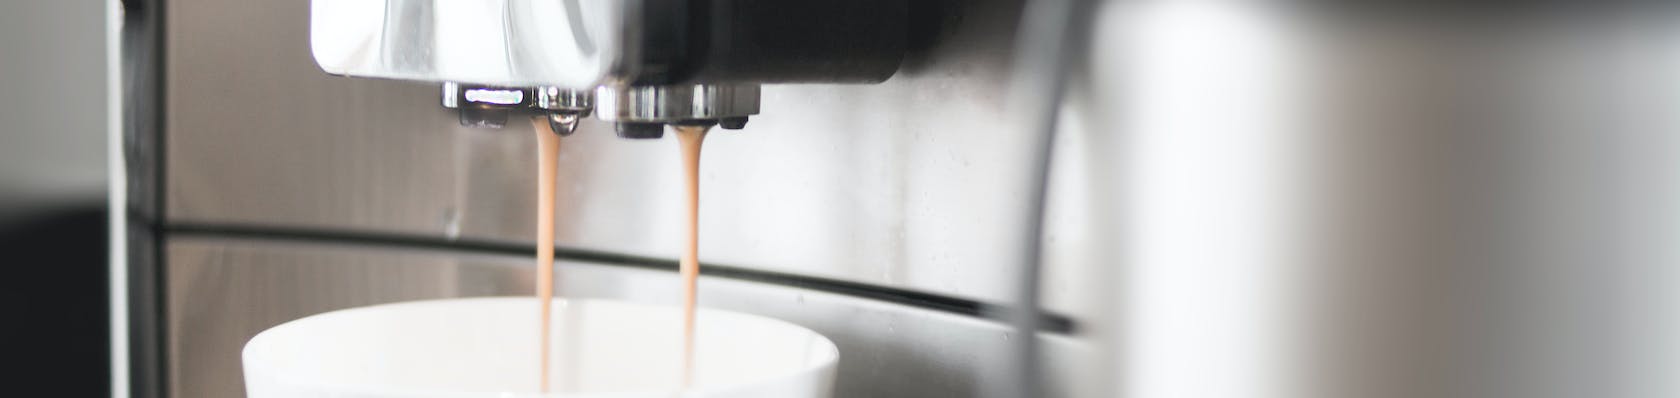 Le Migliori Macchine da Caffè Premium: Una Guida per Gli Intenditori